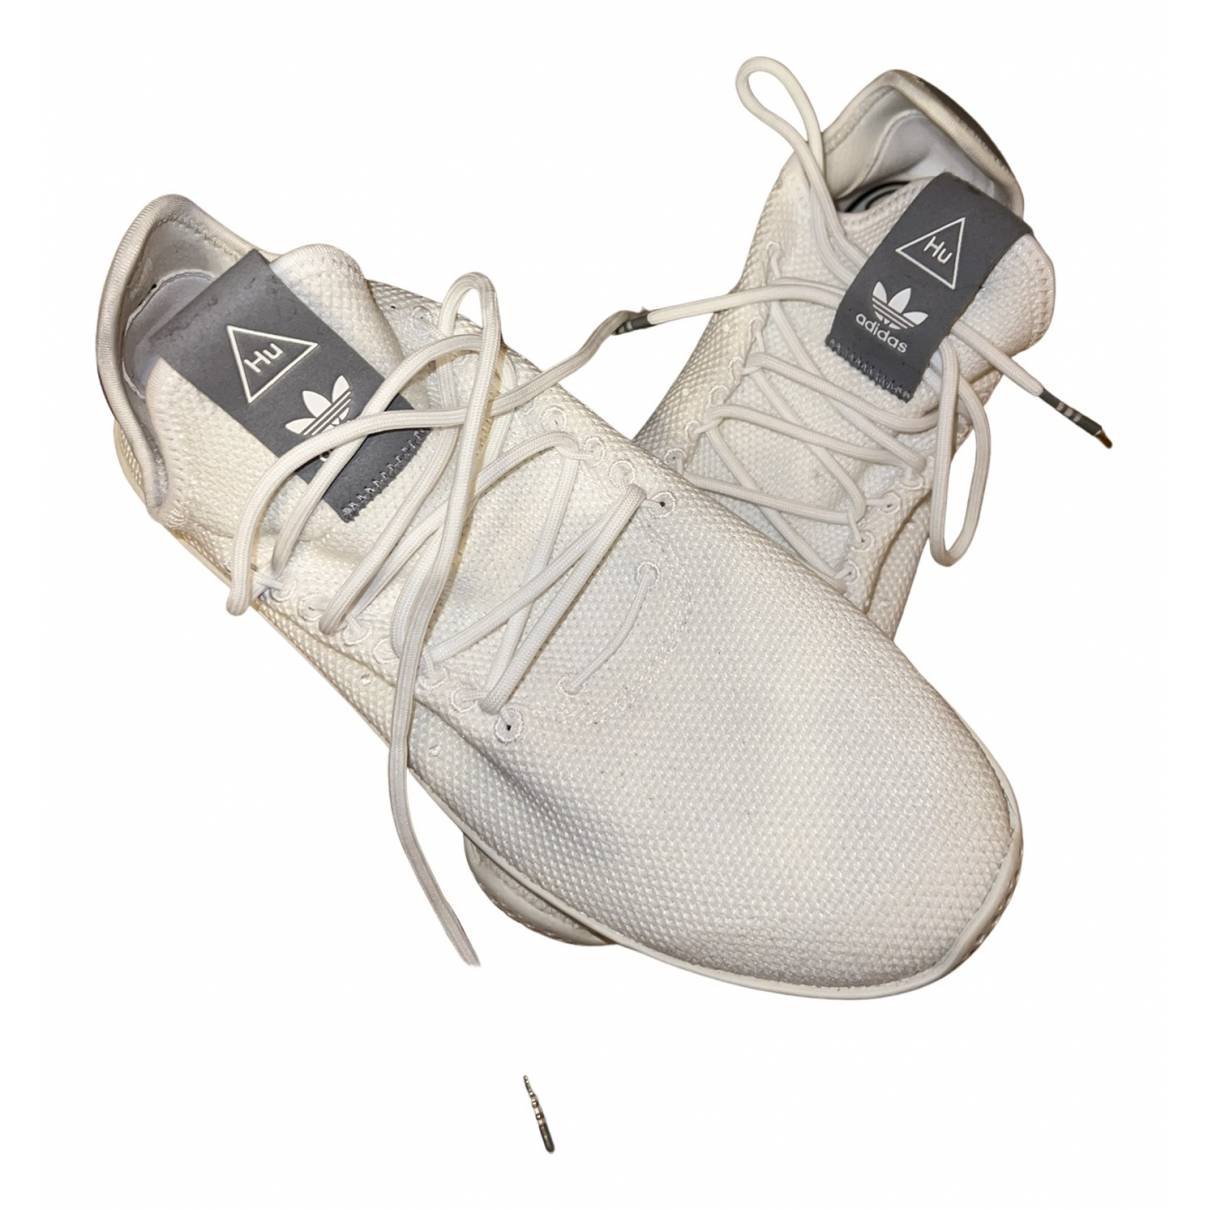 Nmd hu cloth low trainers Adidas x Pharrell Williams White size 43.5 EU in  Cloth - 30750321